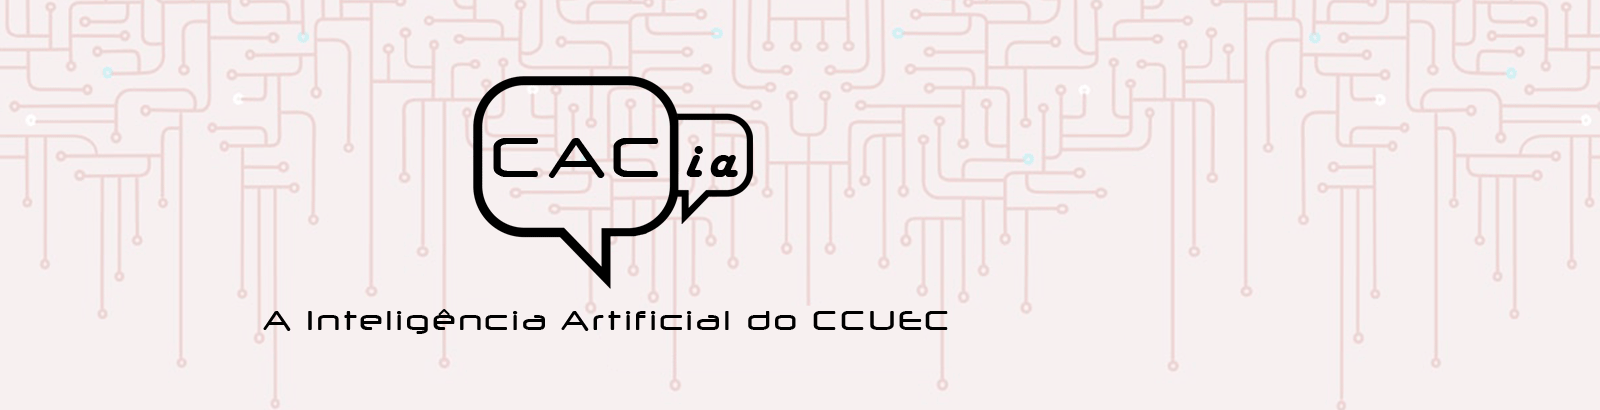 CACia – Assistente Virtual Inteligente